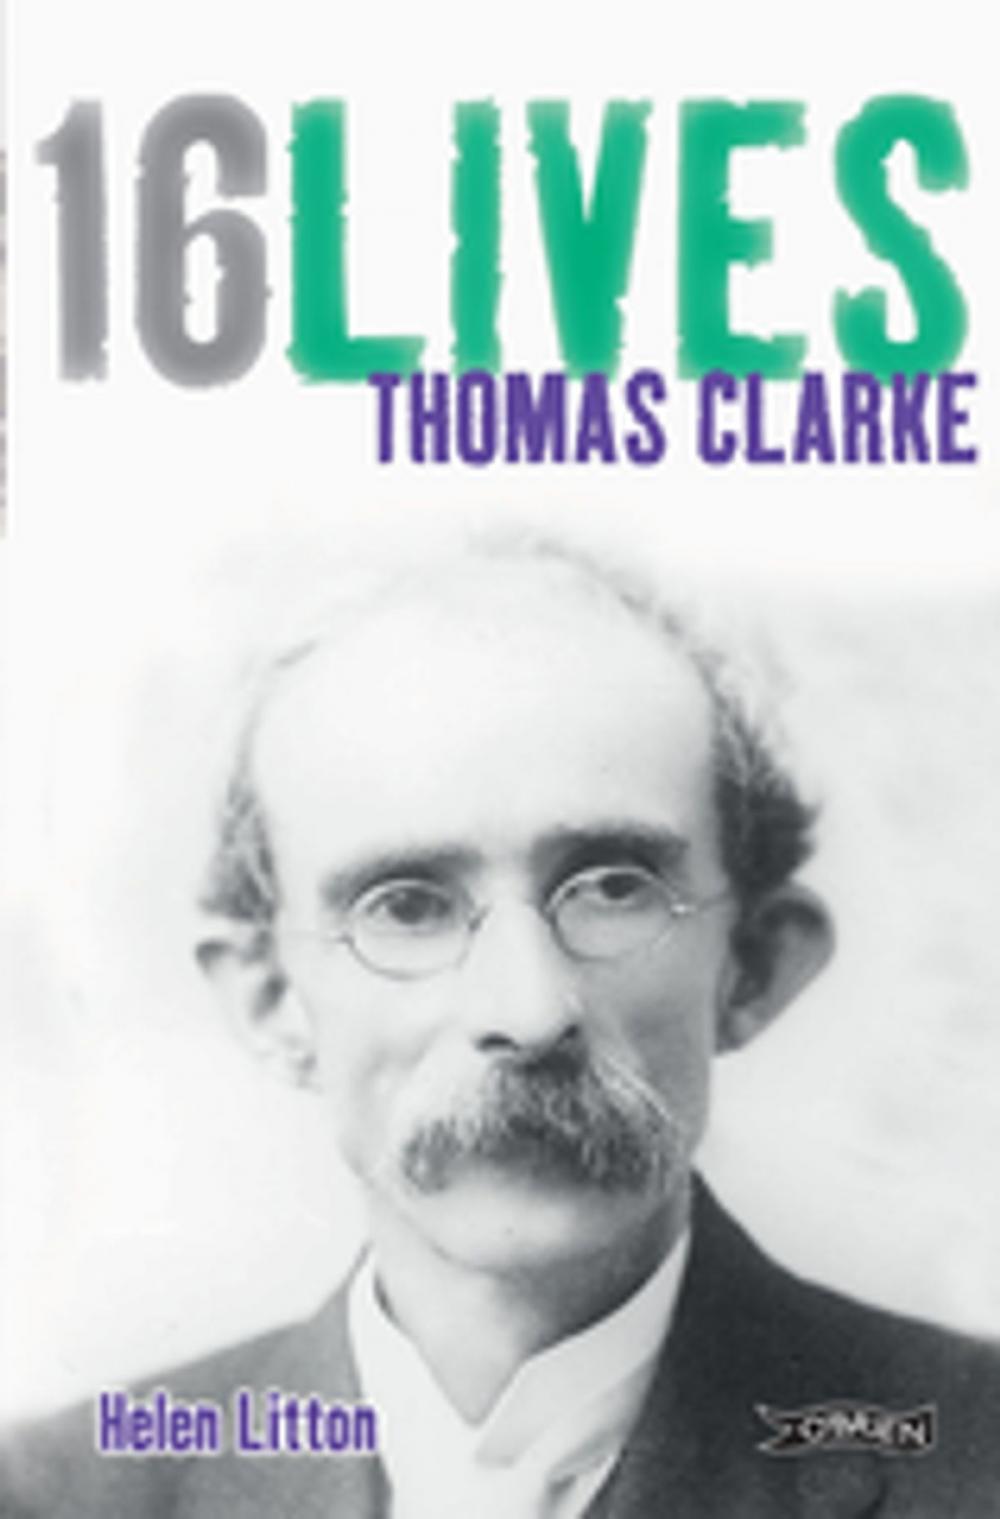 Big bigCover of Thomas Clarke